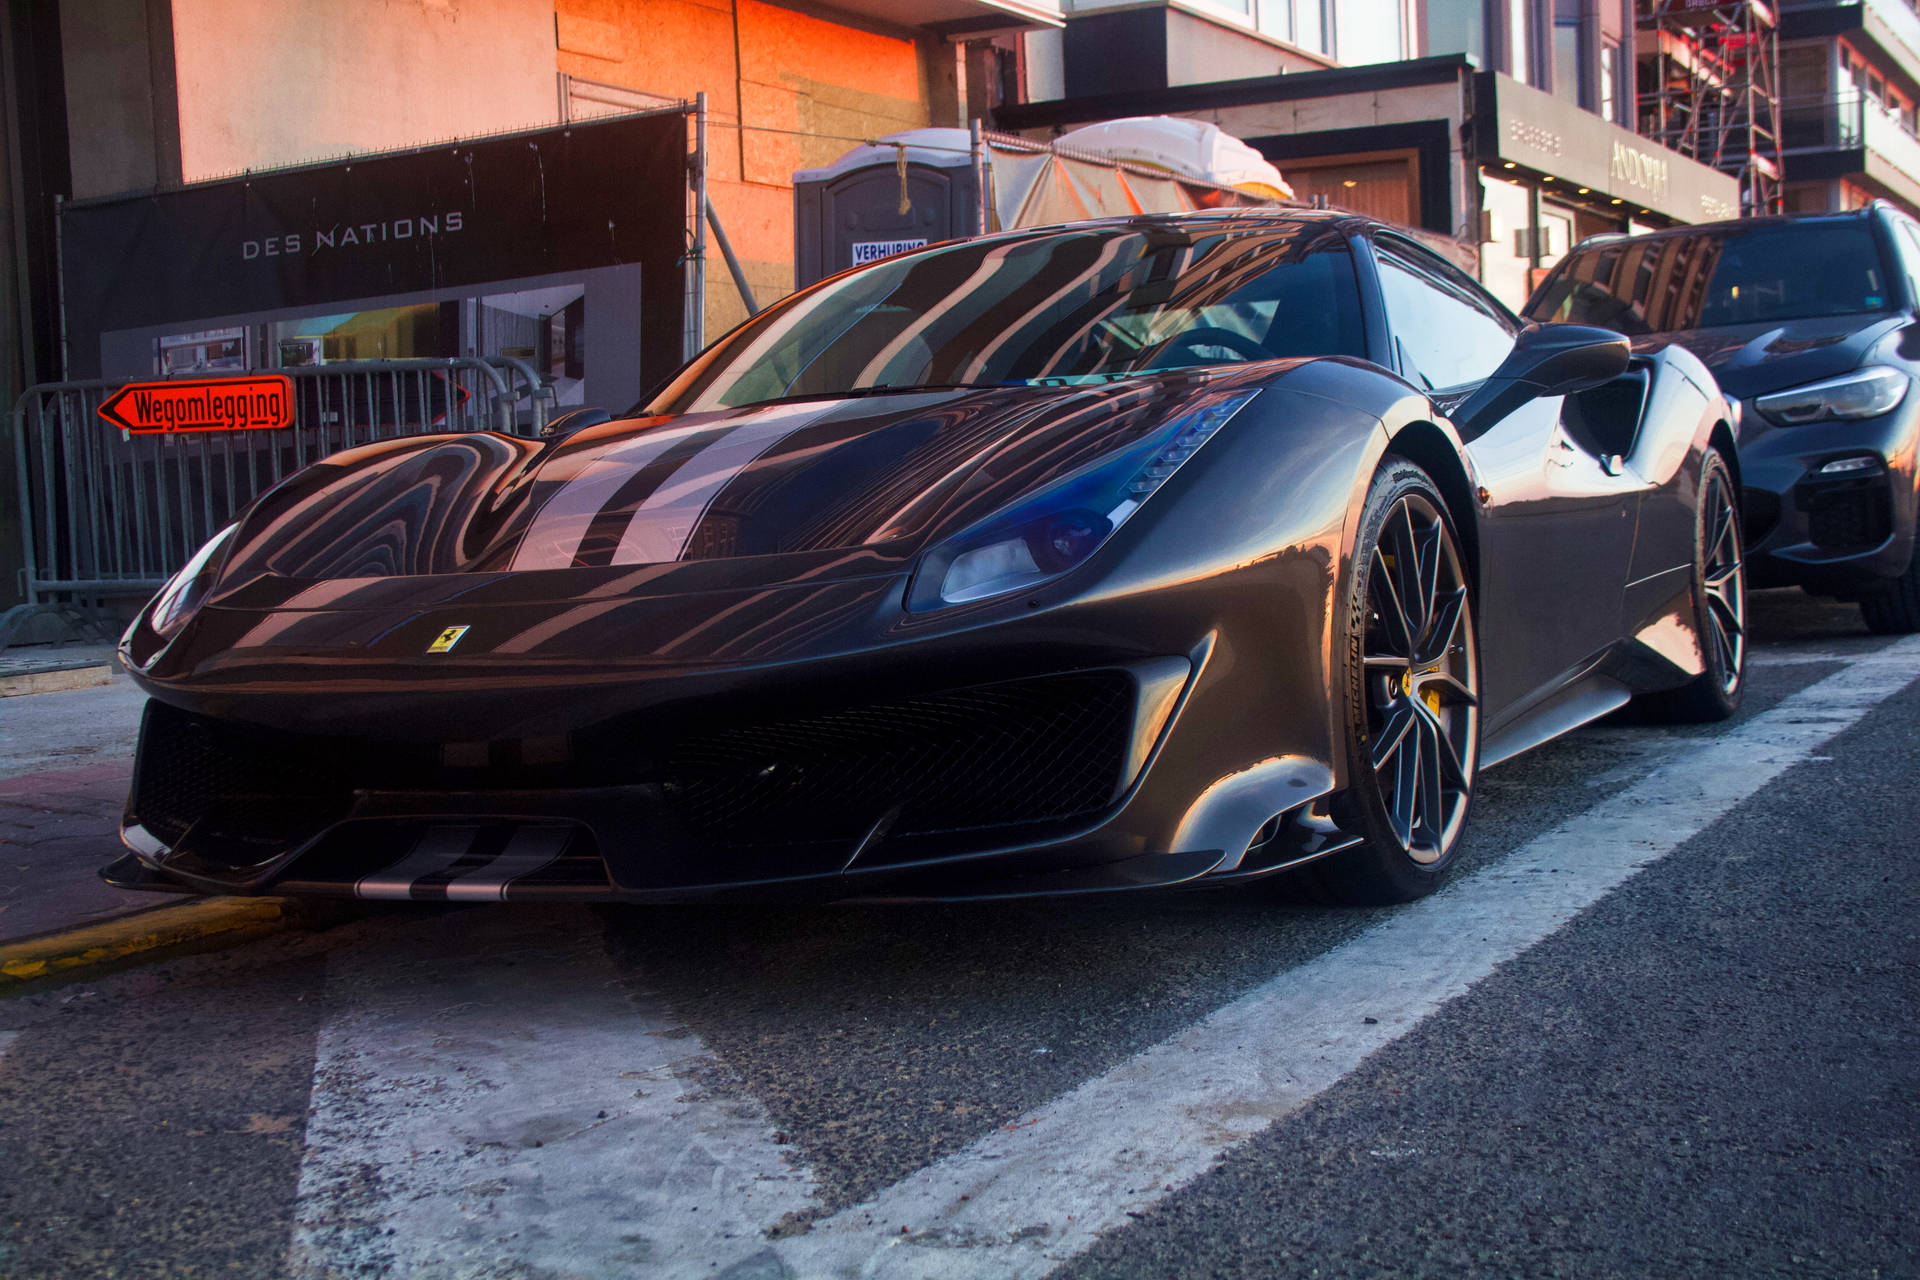 Black Ferrari sports car parked on street wallpaper.